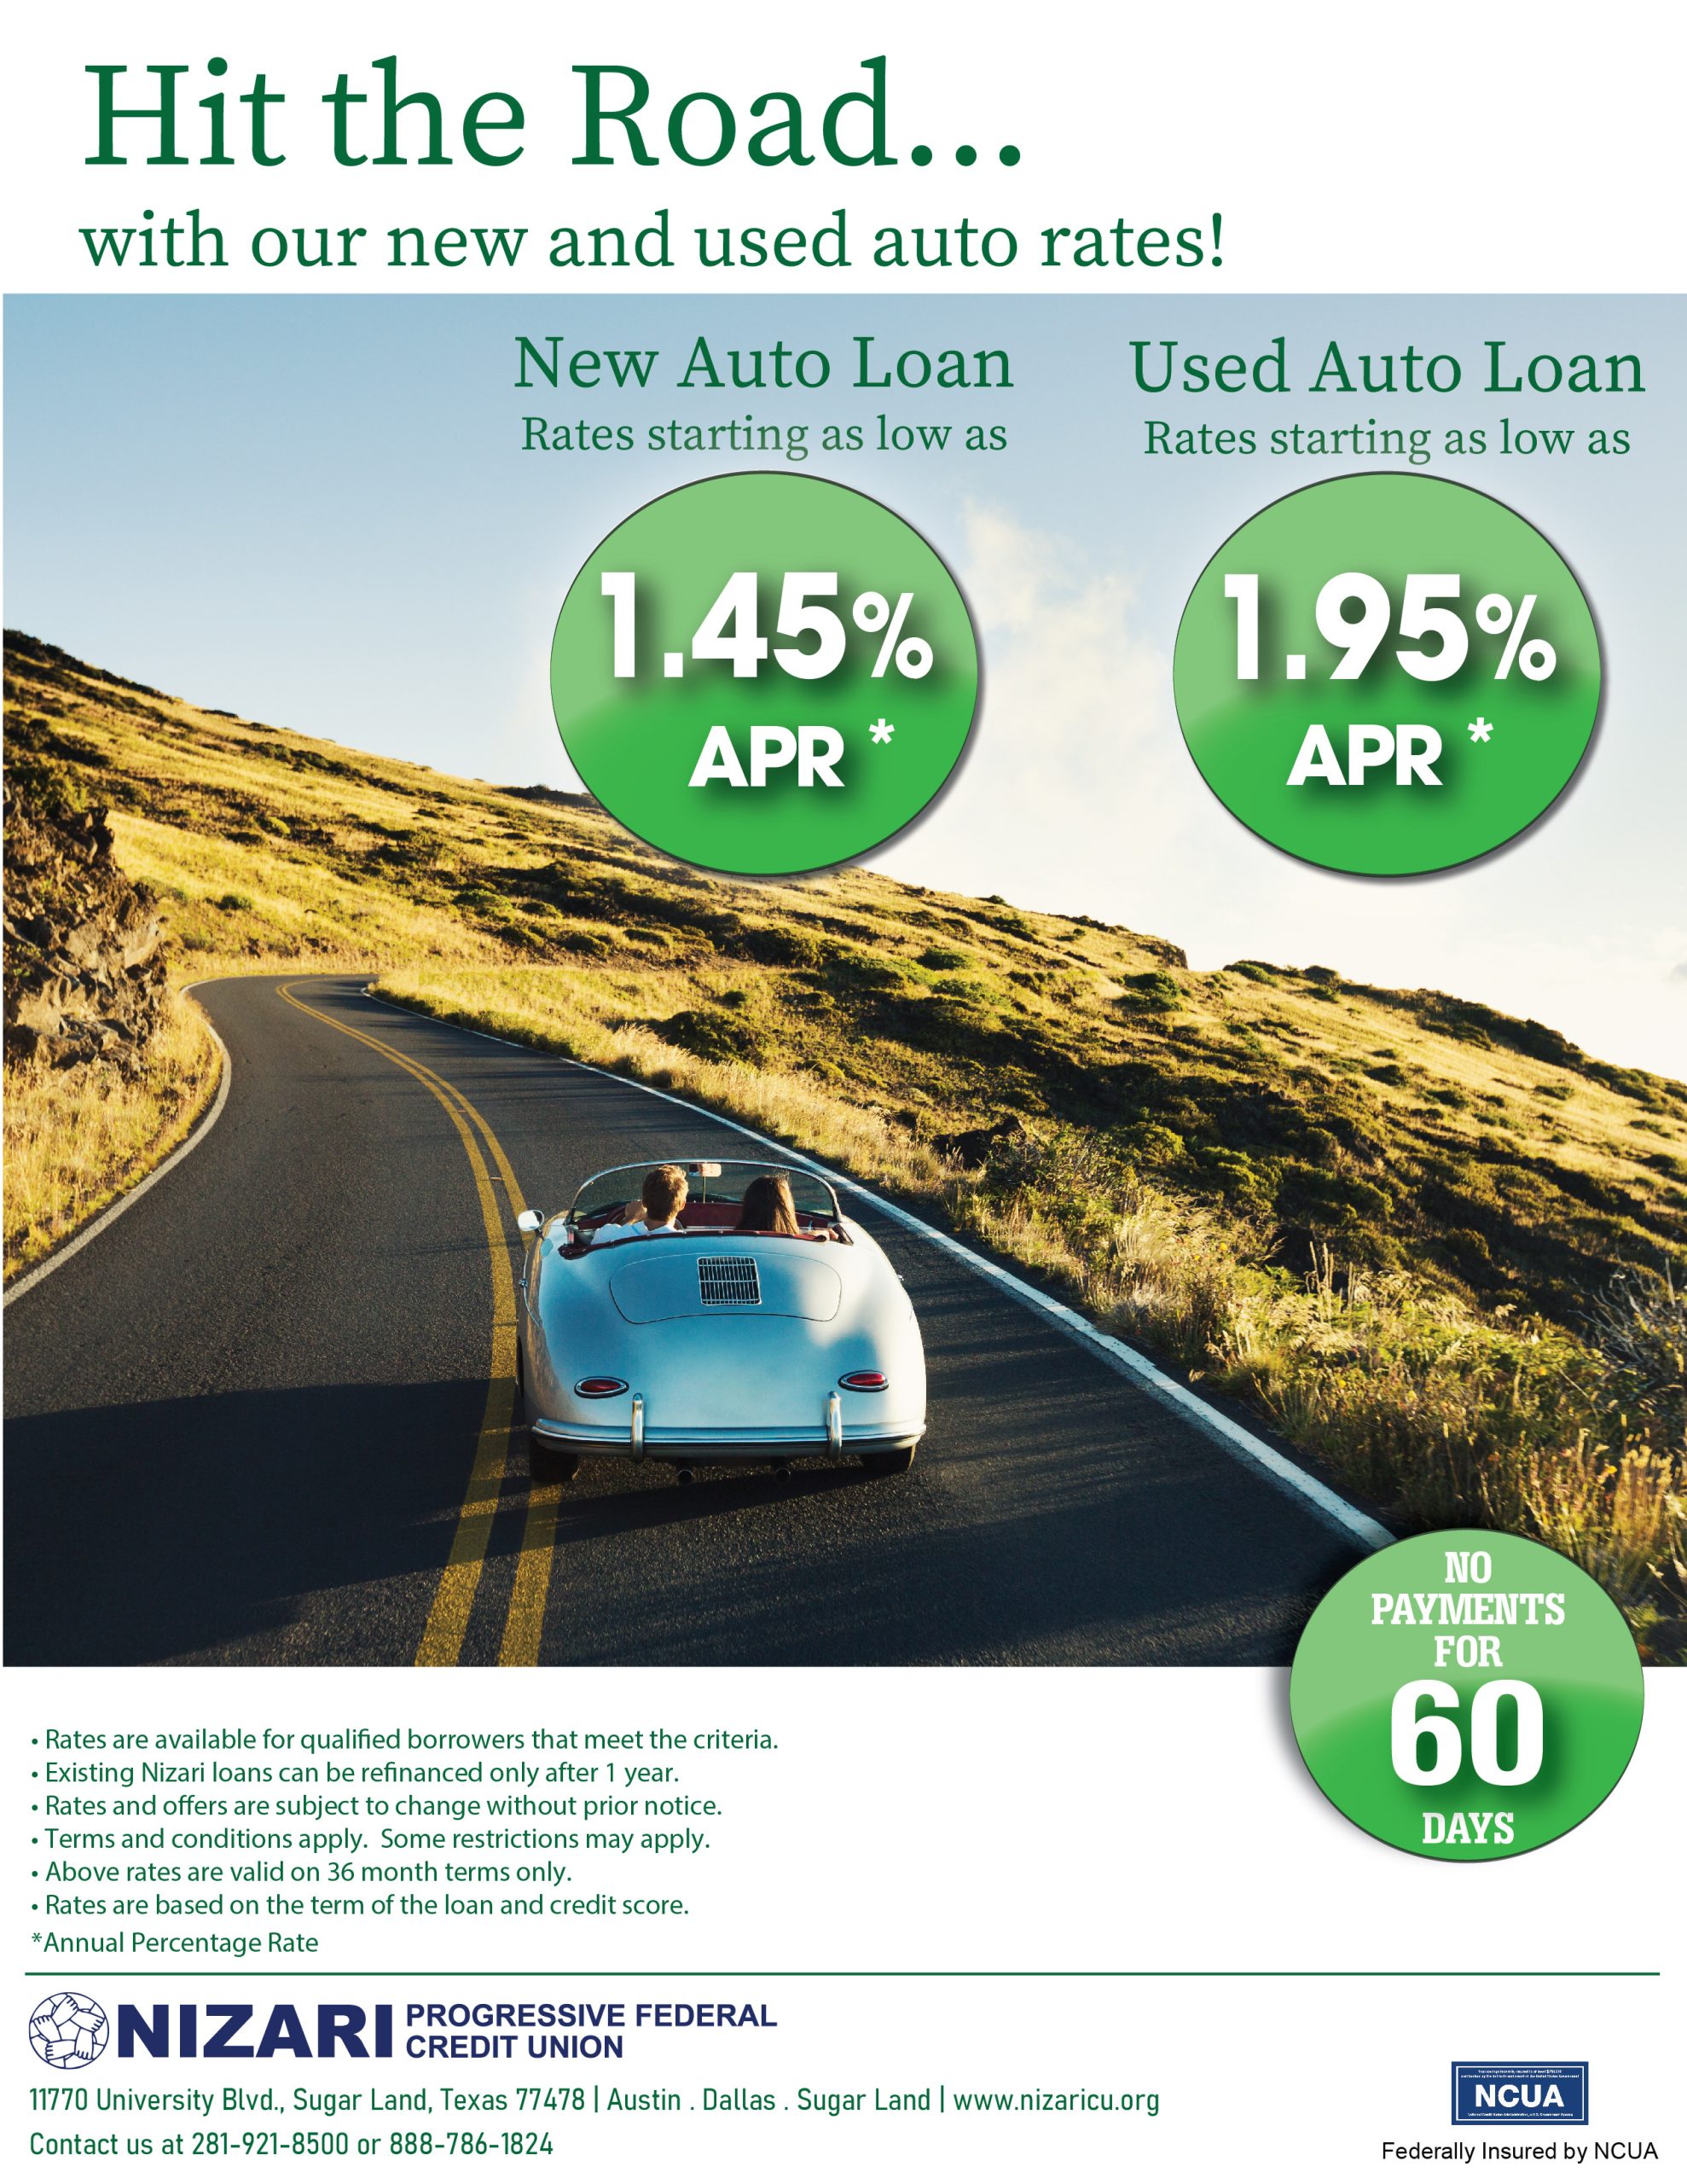 safe federal credit union auto loans